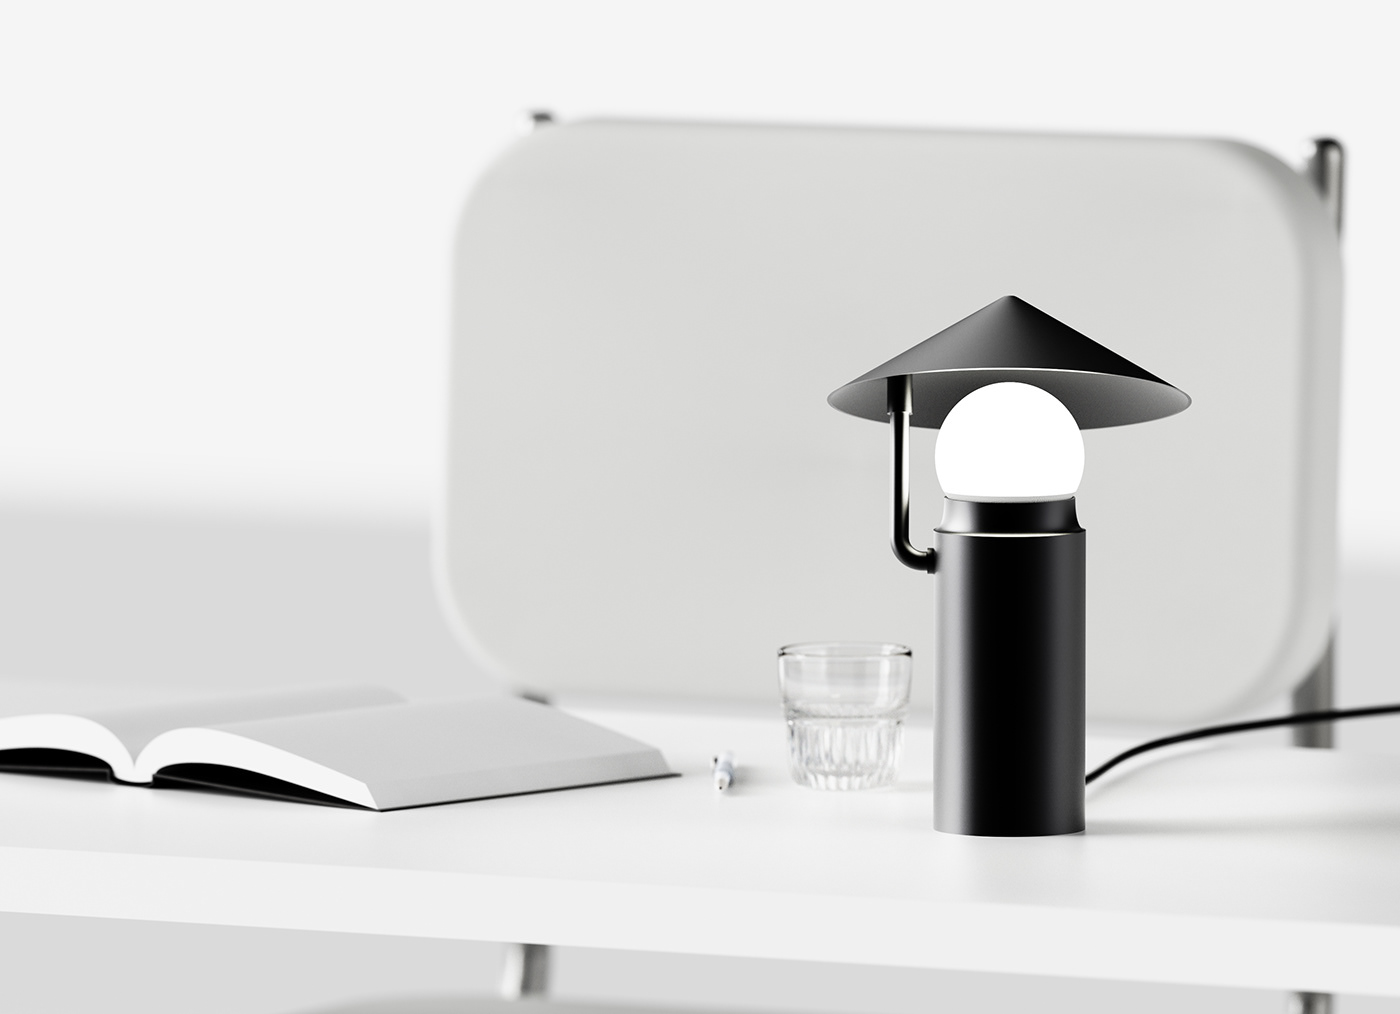 Lamp product modern Render minimal light lighting industrial design  desk table